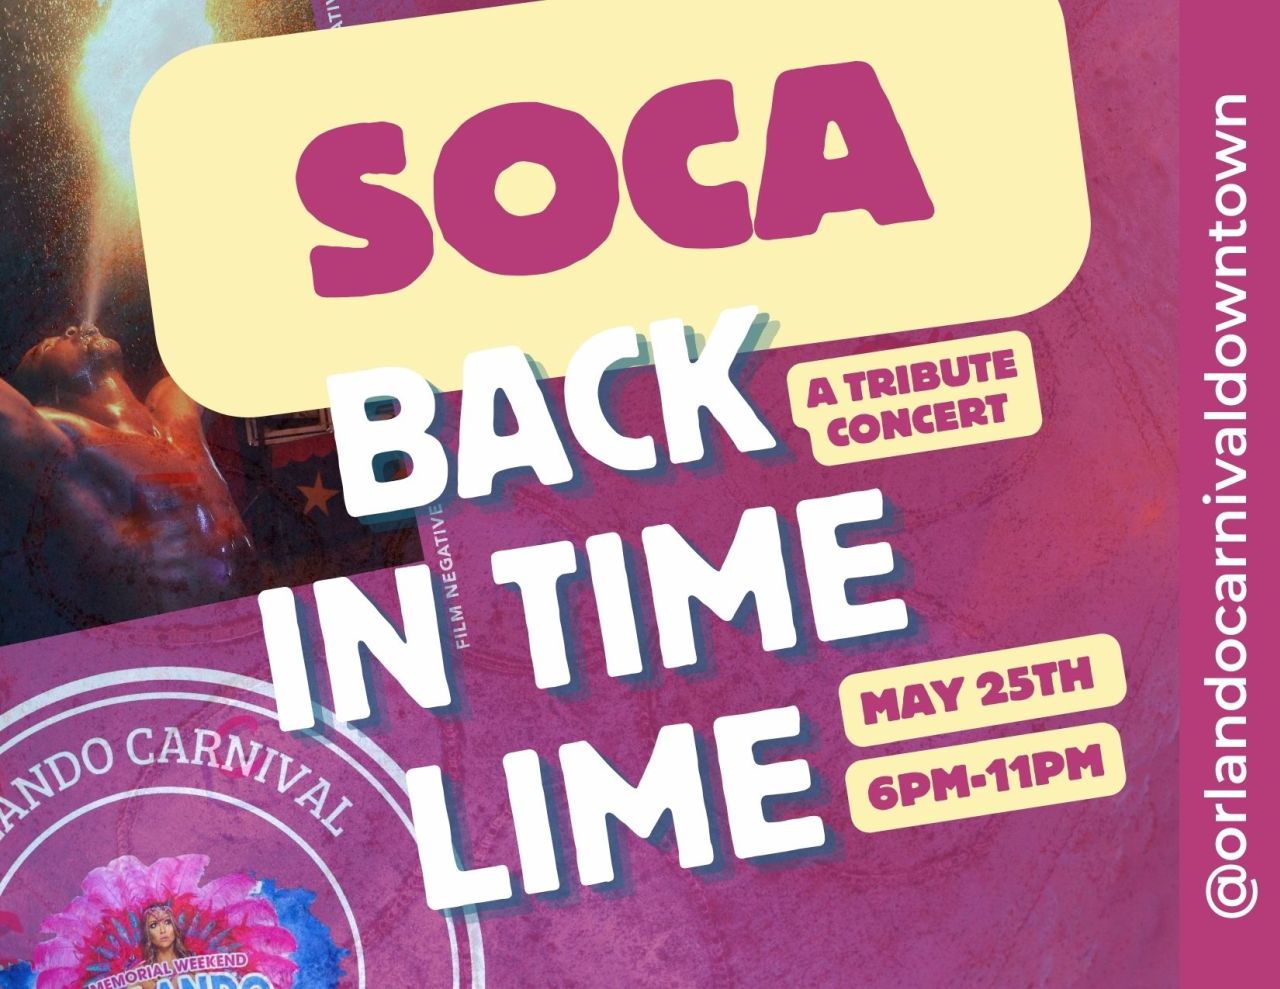 Soca Back In Time Lime